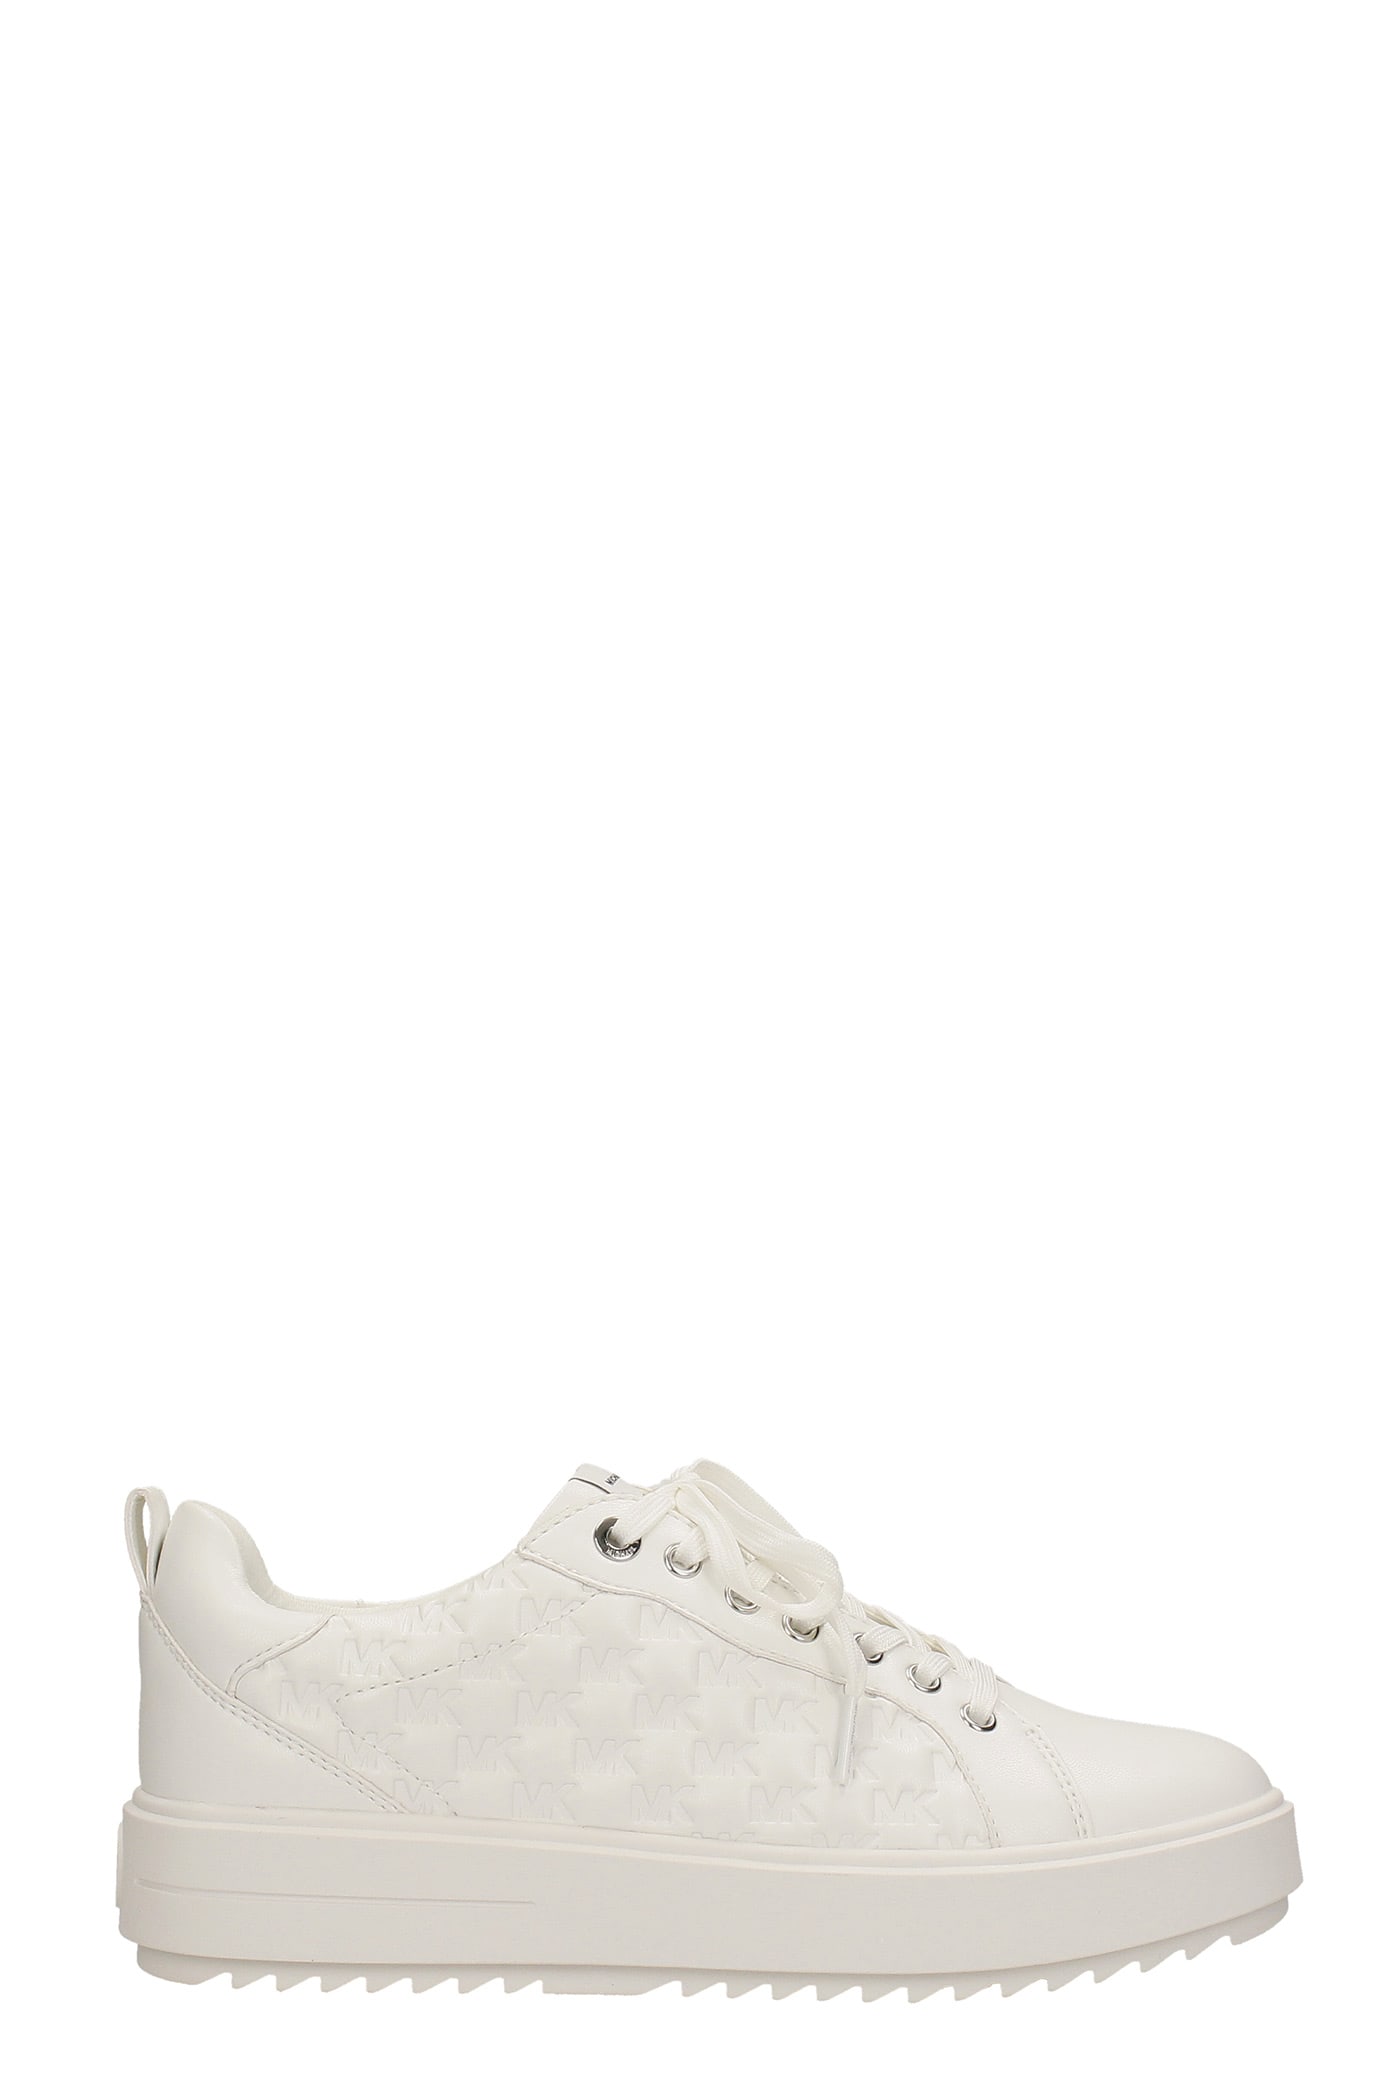 Michael Kors Emmett Sneakers In White Leather